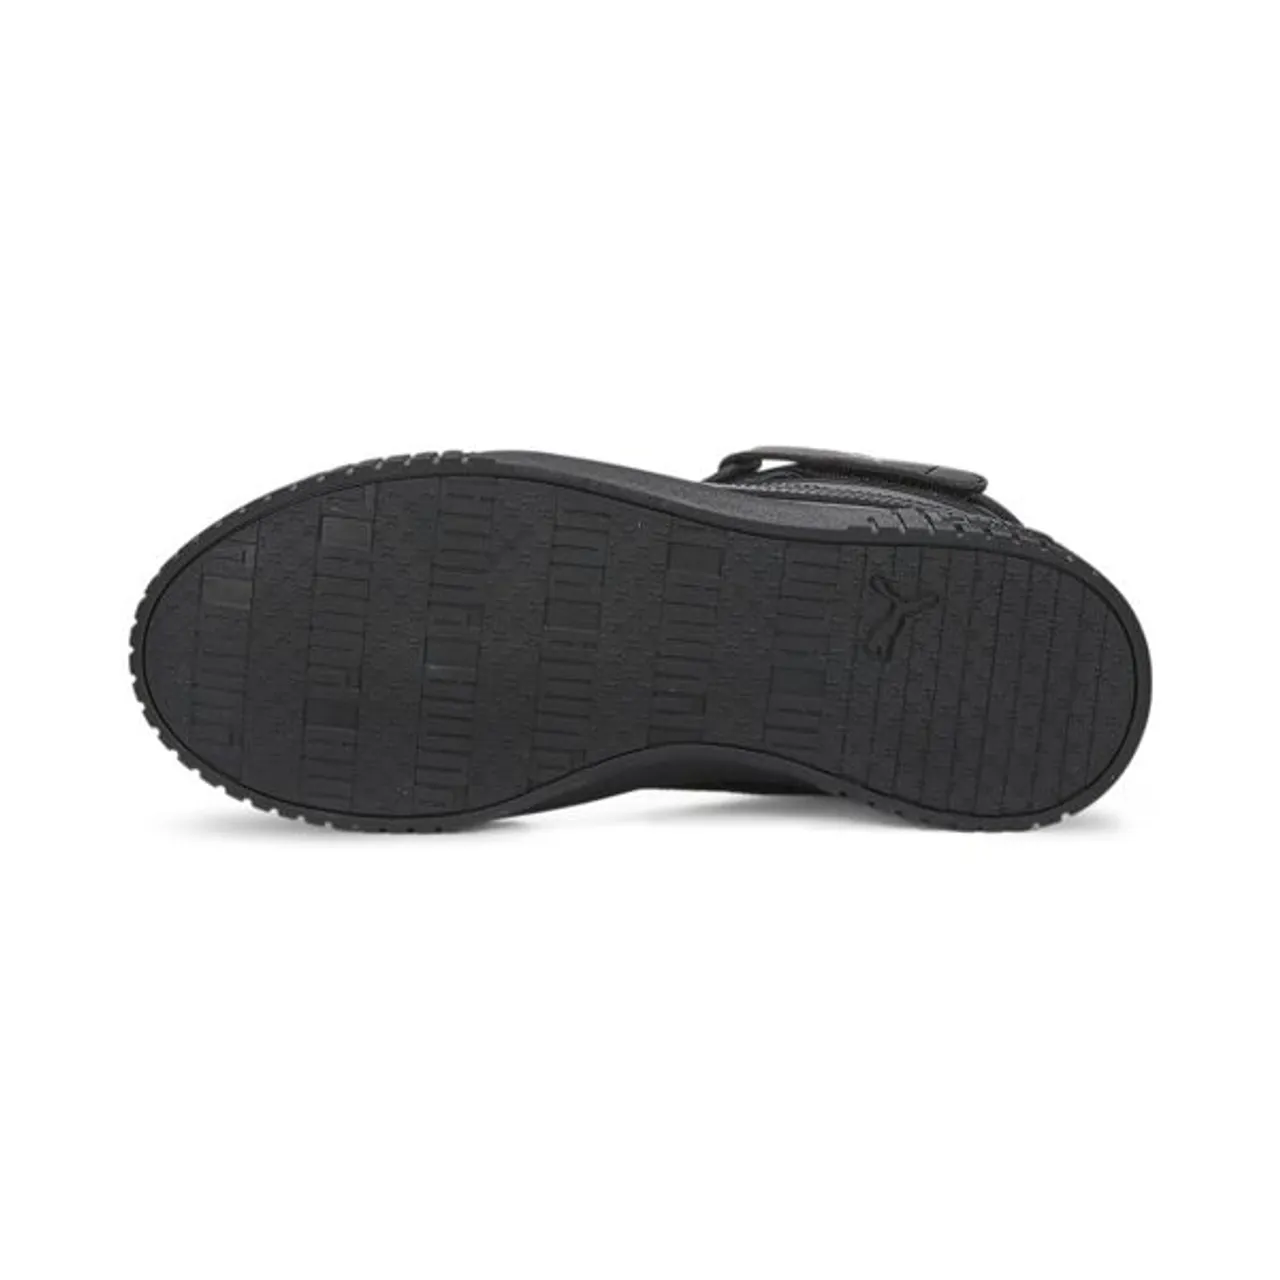 Sneaker PUMA "Carina 2.0 Mid Sneakers Damen" Gr. 38, schwarz (black dark shadow gray) Schuhe Schnürstiefeletten